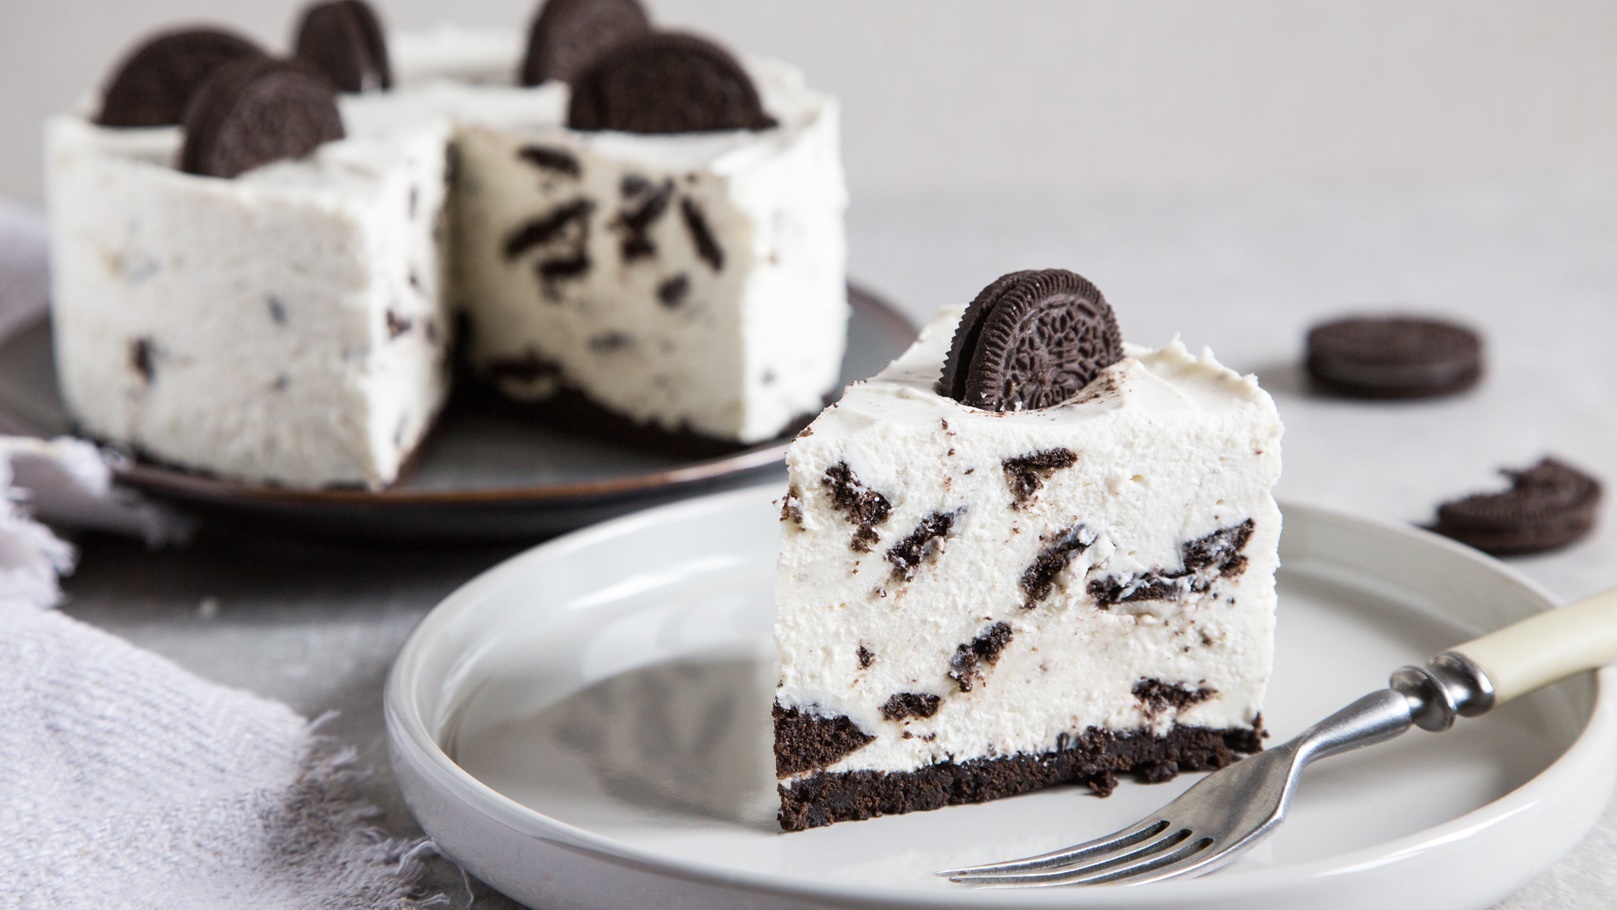 creamy-no-bake-cheesecake-with-chocolate-cookies-2021-08-27-11-35-49-utc